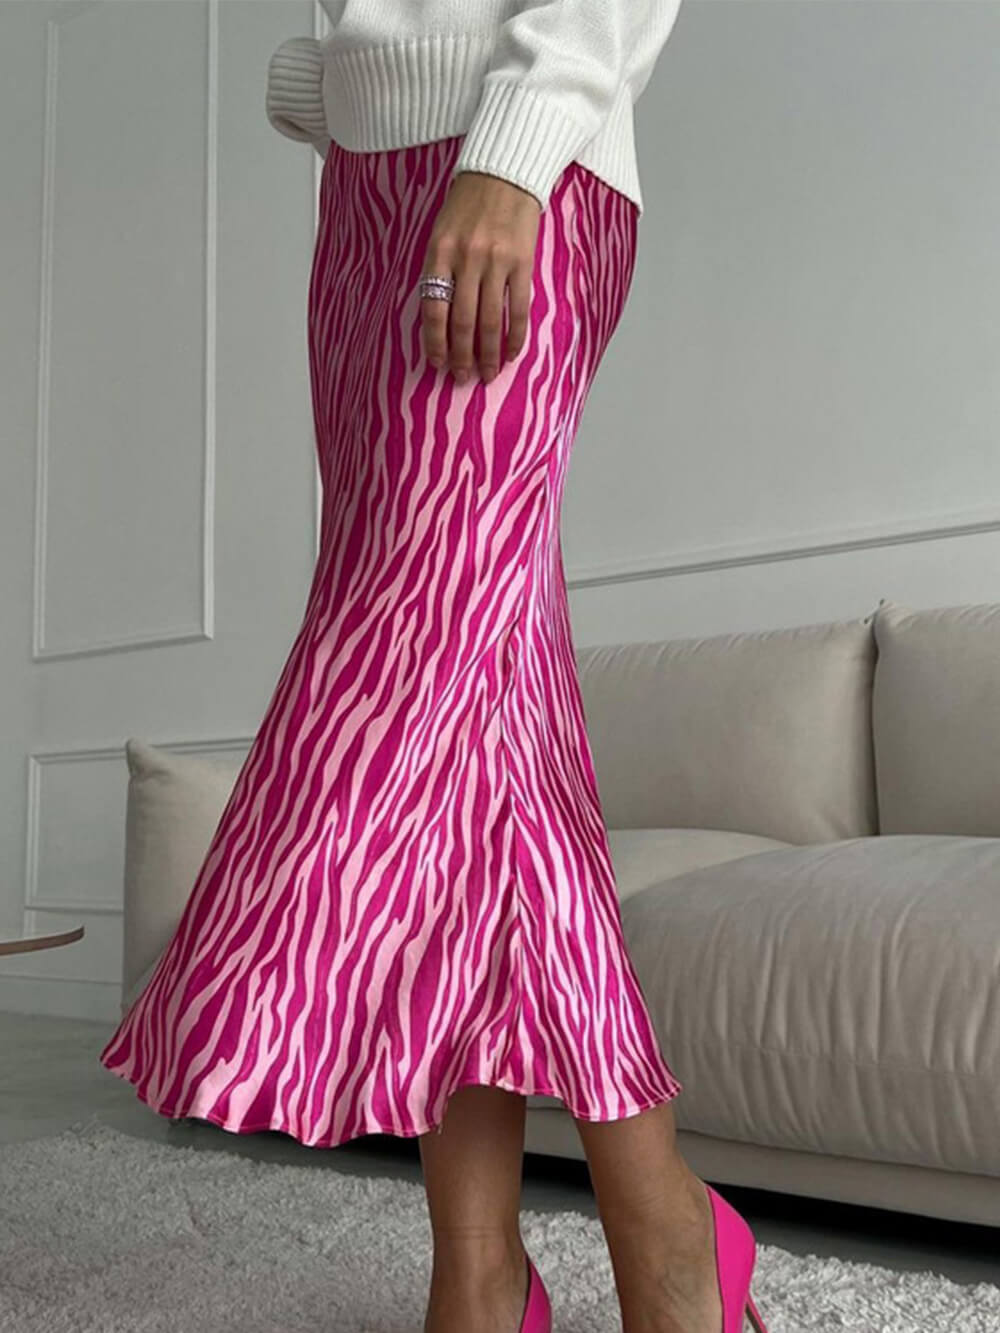 French print fashionable fishtail skirt